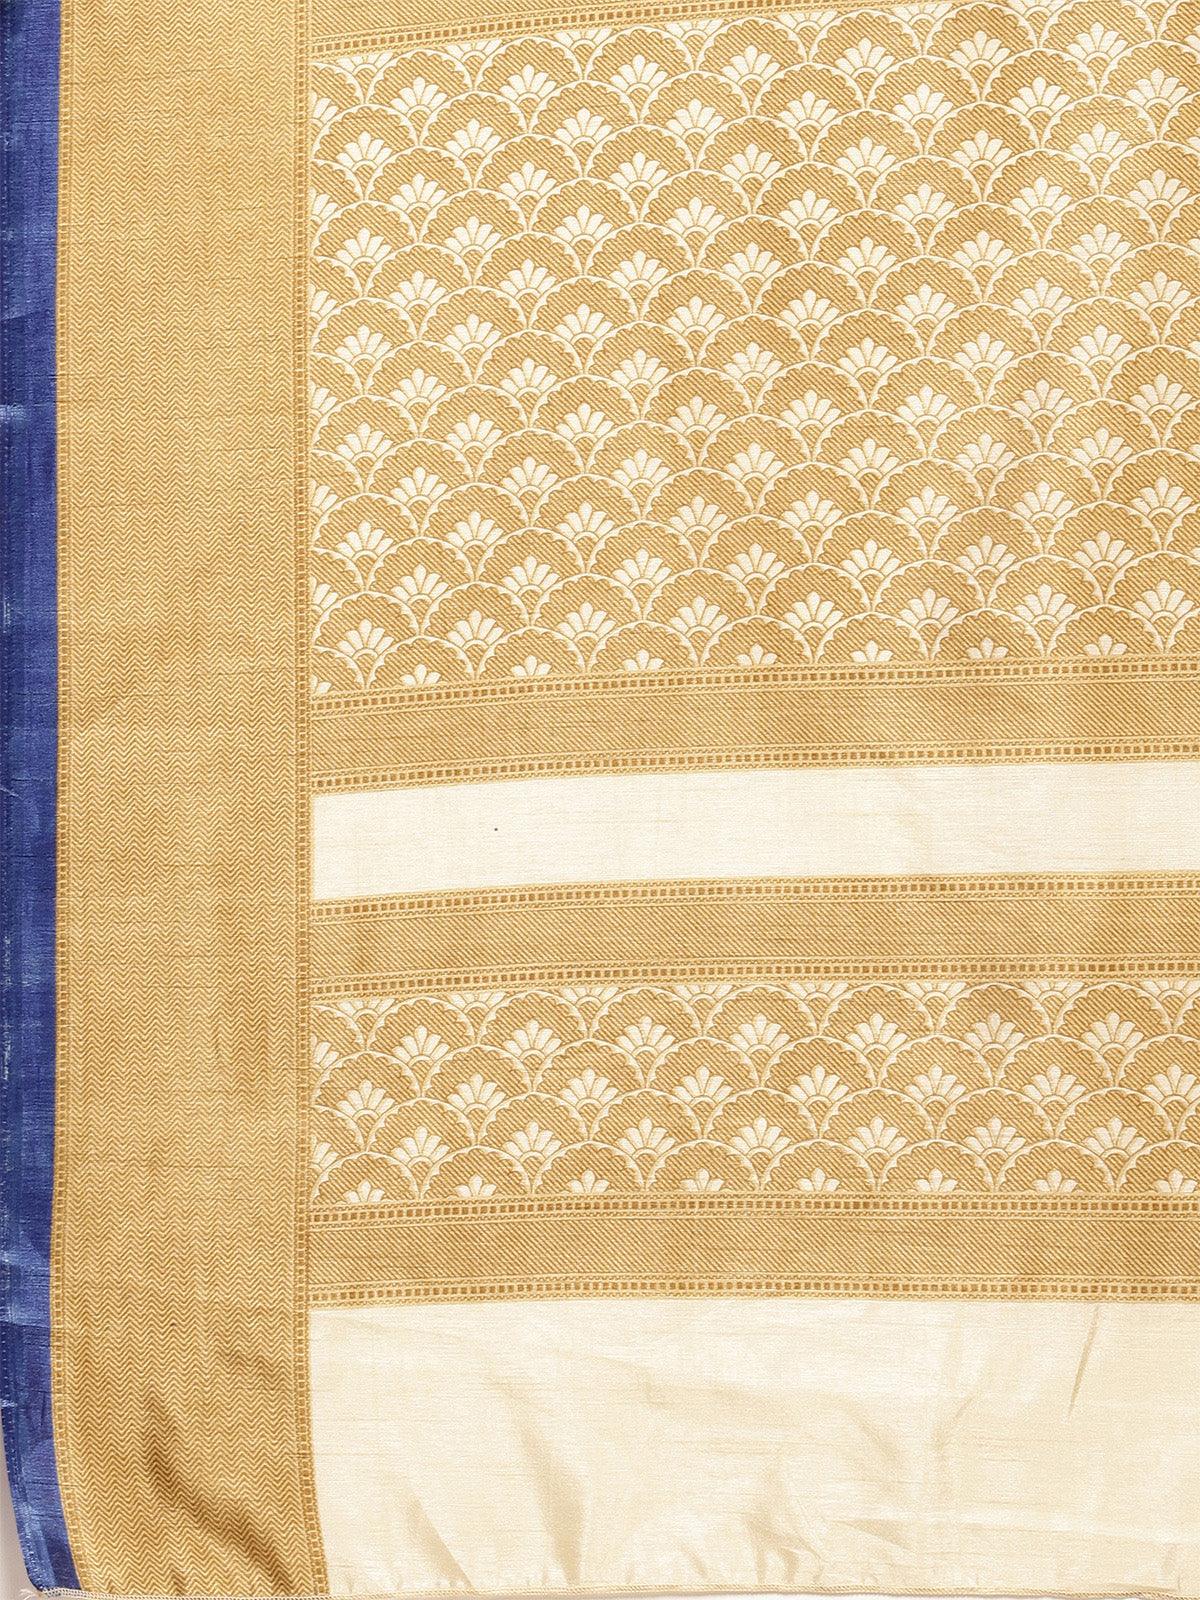 Silk Blend Beige Printed Saree With Blouse Piece - Odette